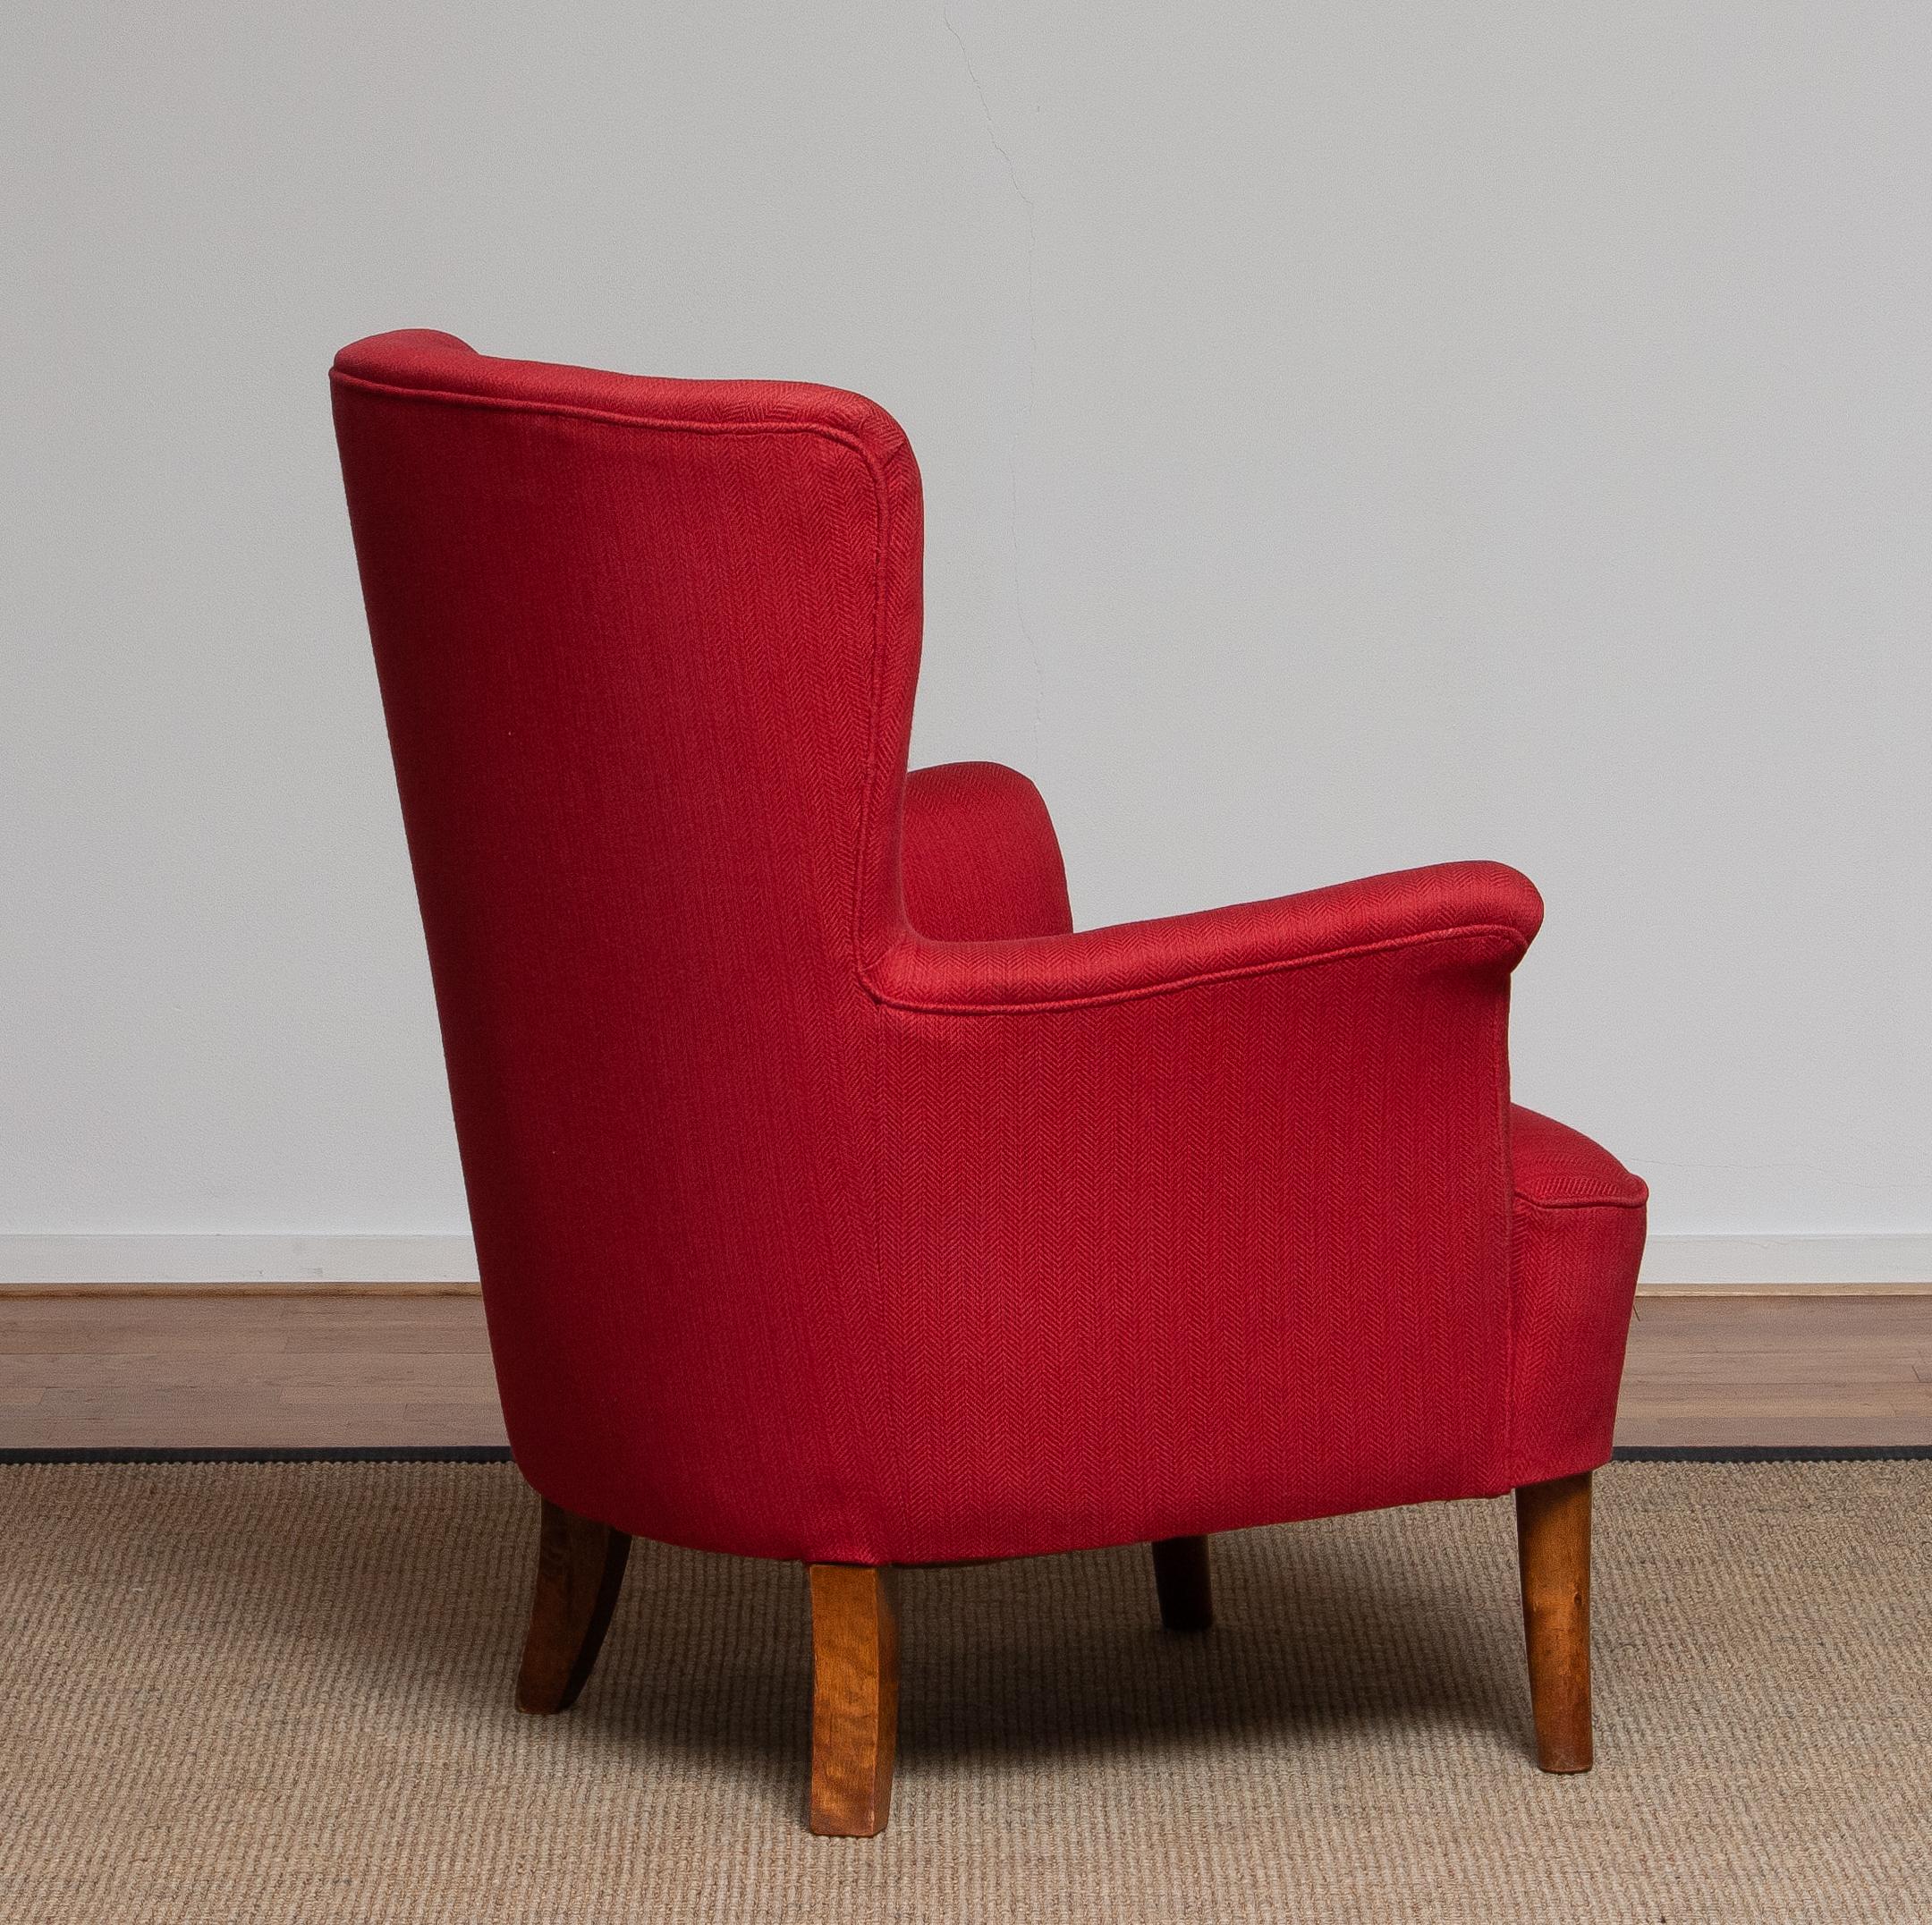 1940s, Fuchsia Easy / Lounge Lounge Chair by Carl Malmsten for Oh Sjogren Sweden 3